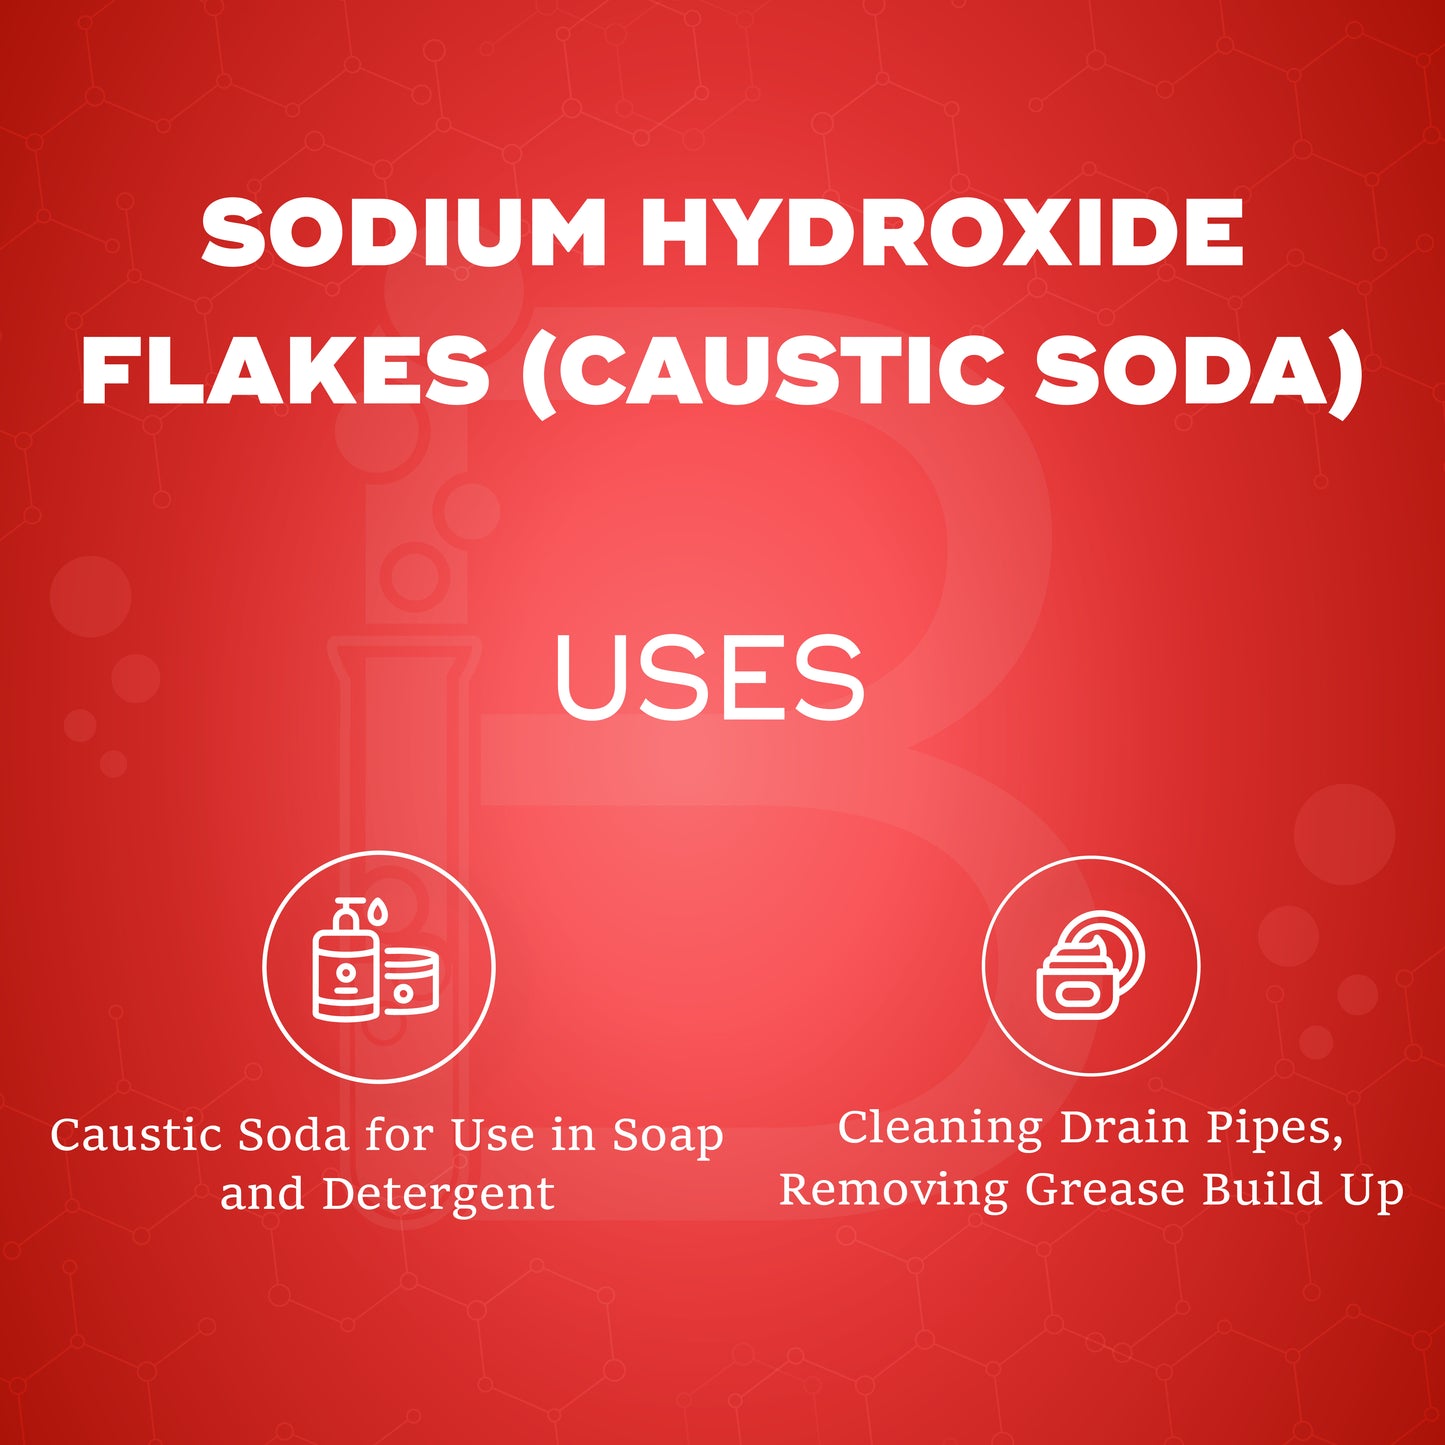 Sodium Hydroxide Flakes (Caustic Soda)